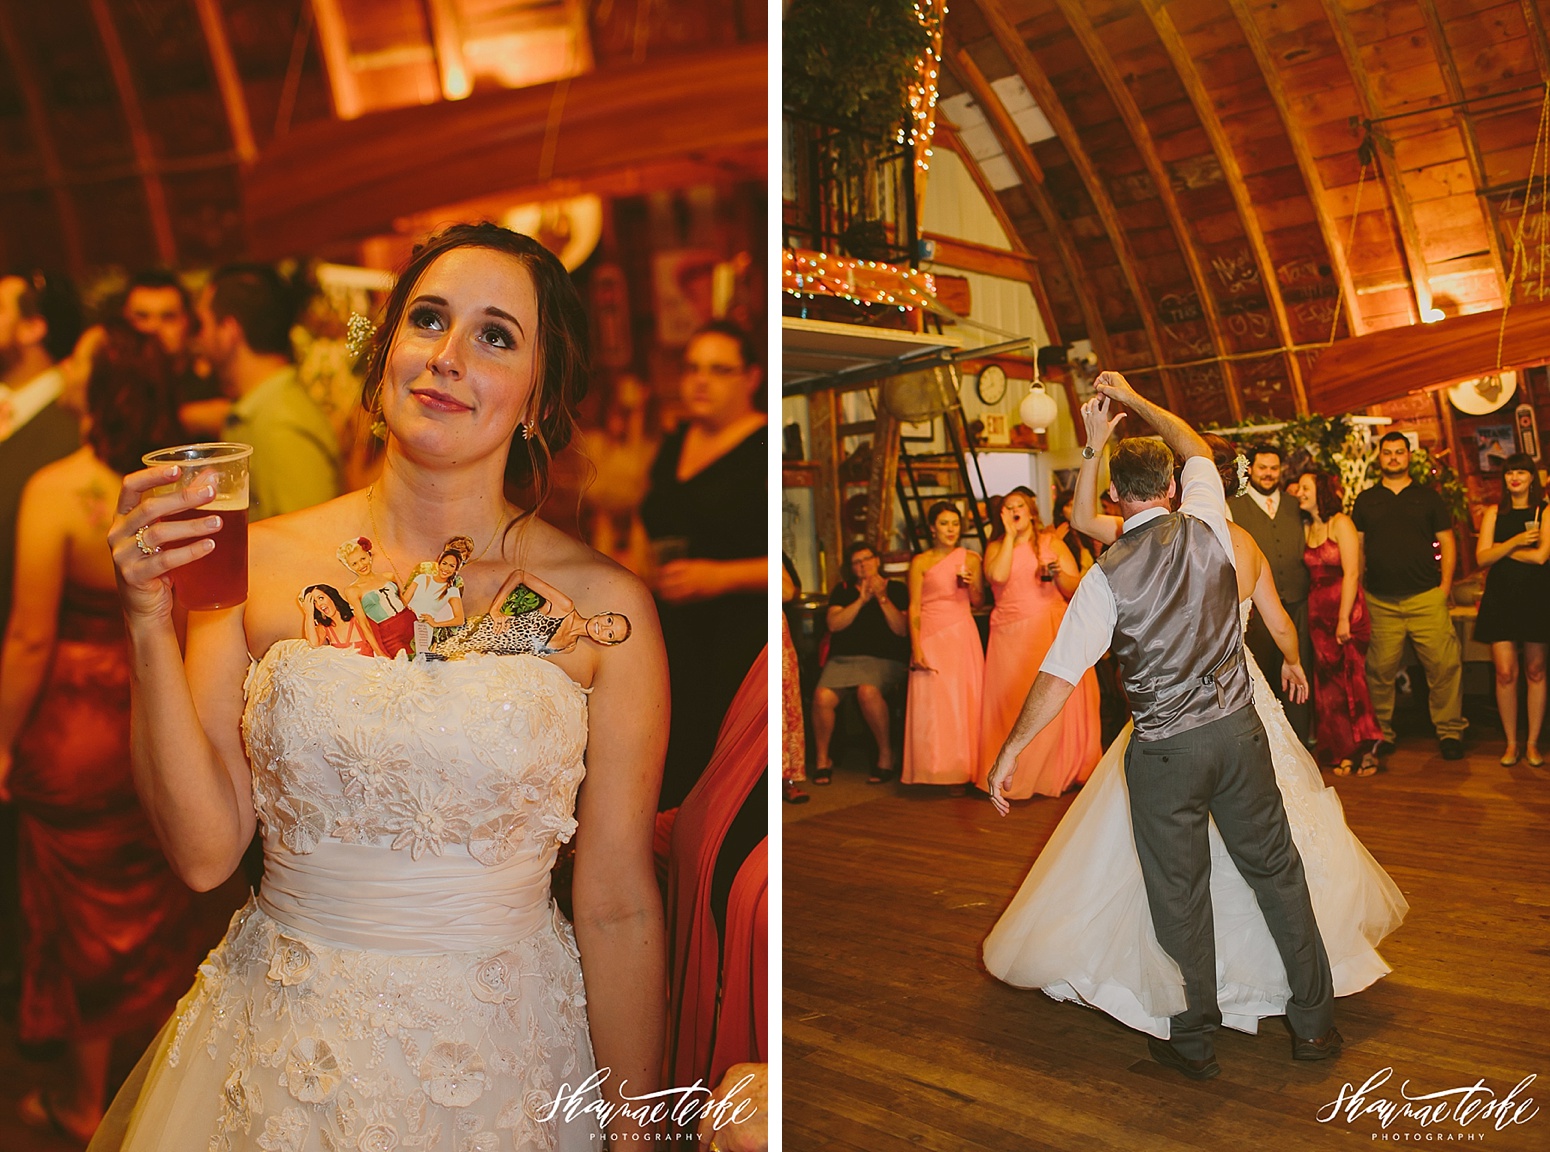 shaunae_teske_wisconsin_photographer_wedding_portrait-best-of-2014-wedding-131